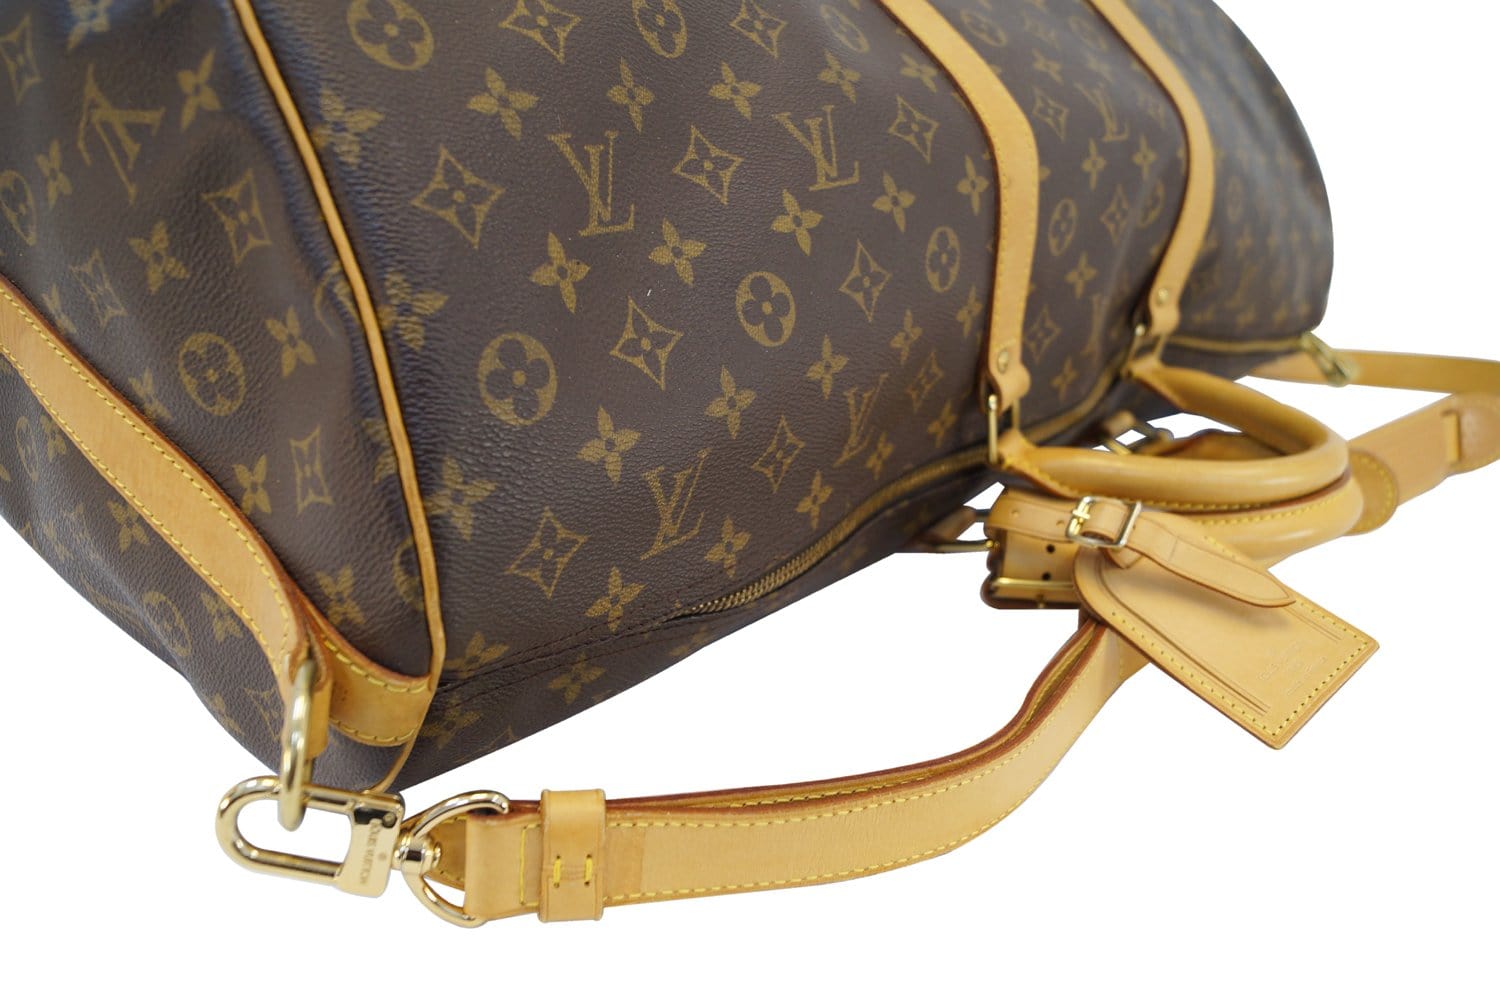 Authentic Louis Vuitton Vintage Boston Bag 60 - Excellent Condition - Never  Used